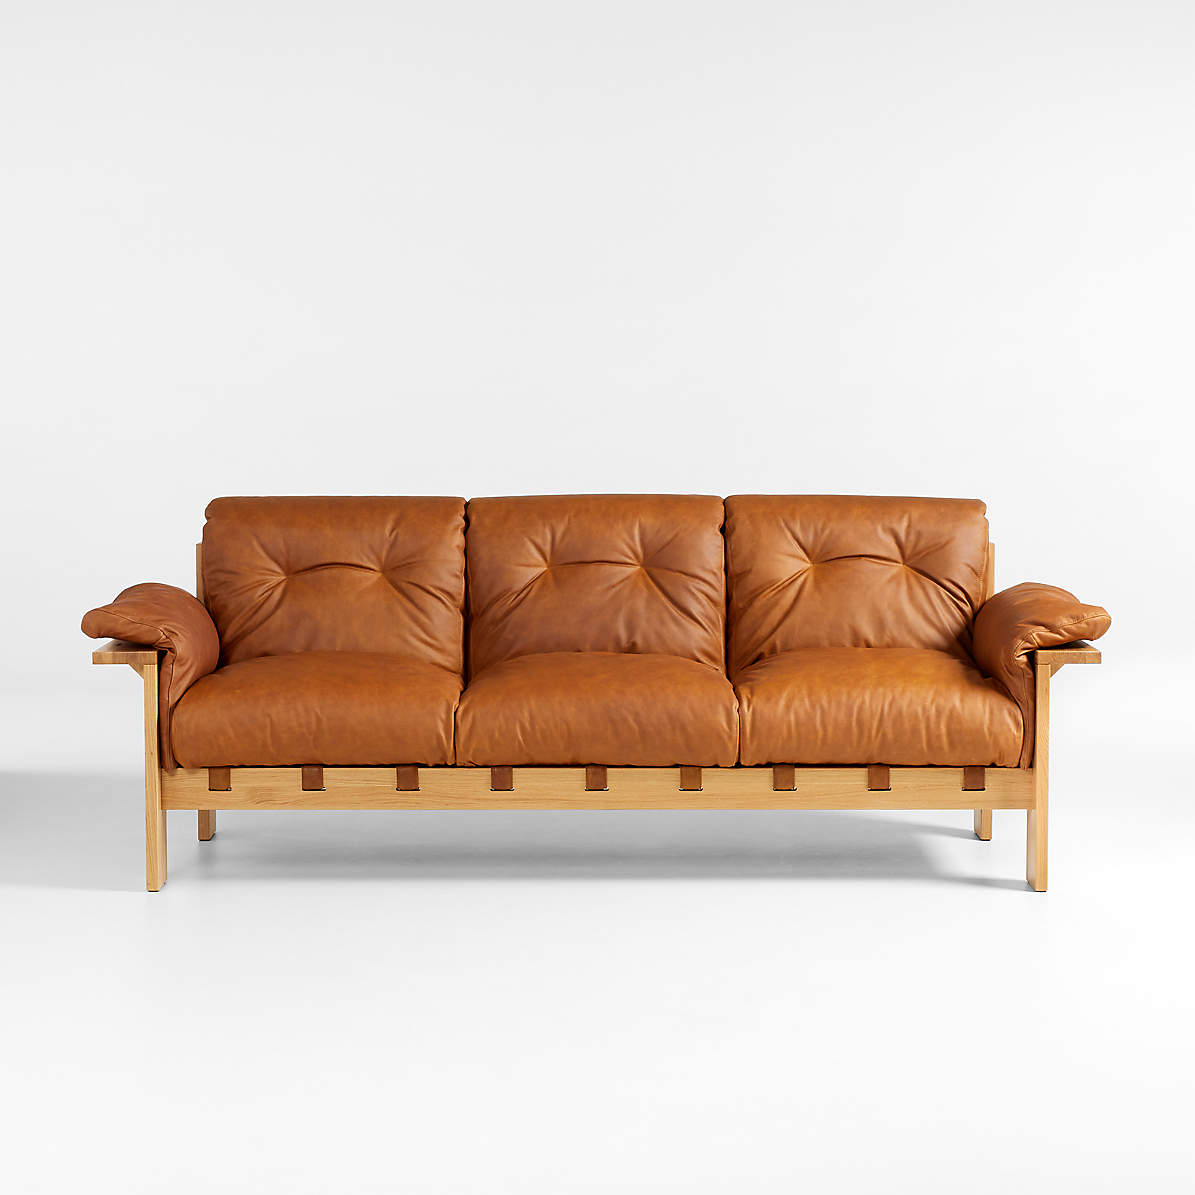 Shinola Runwell Wood Frame Leather Sofa, Leather And Wood Furniture